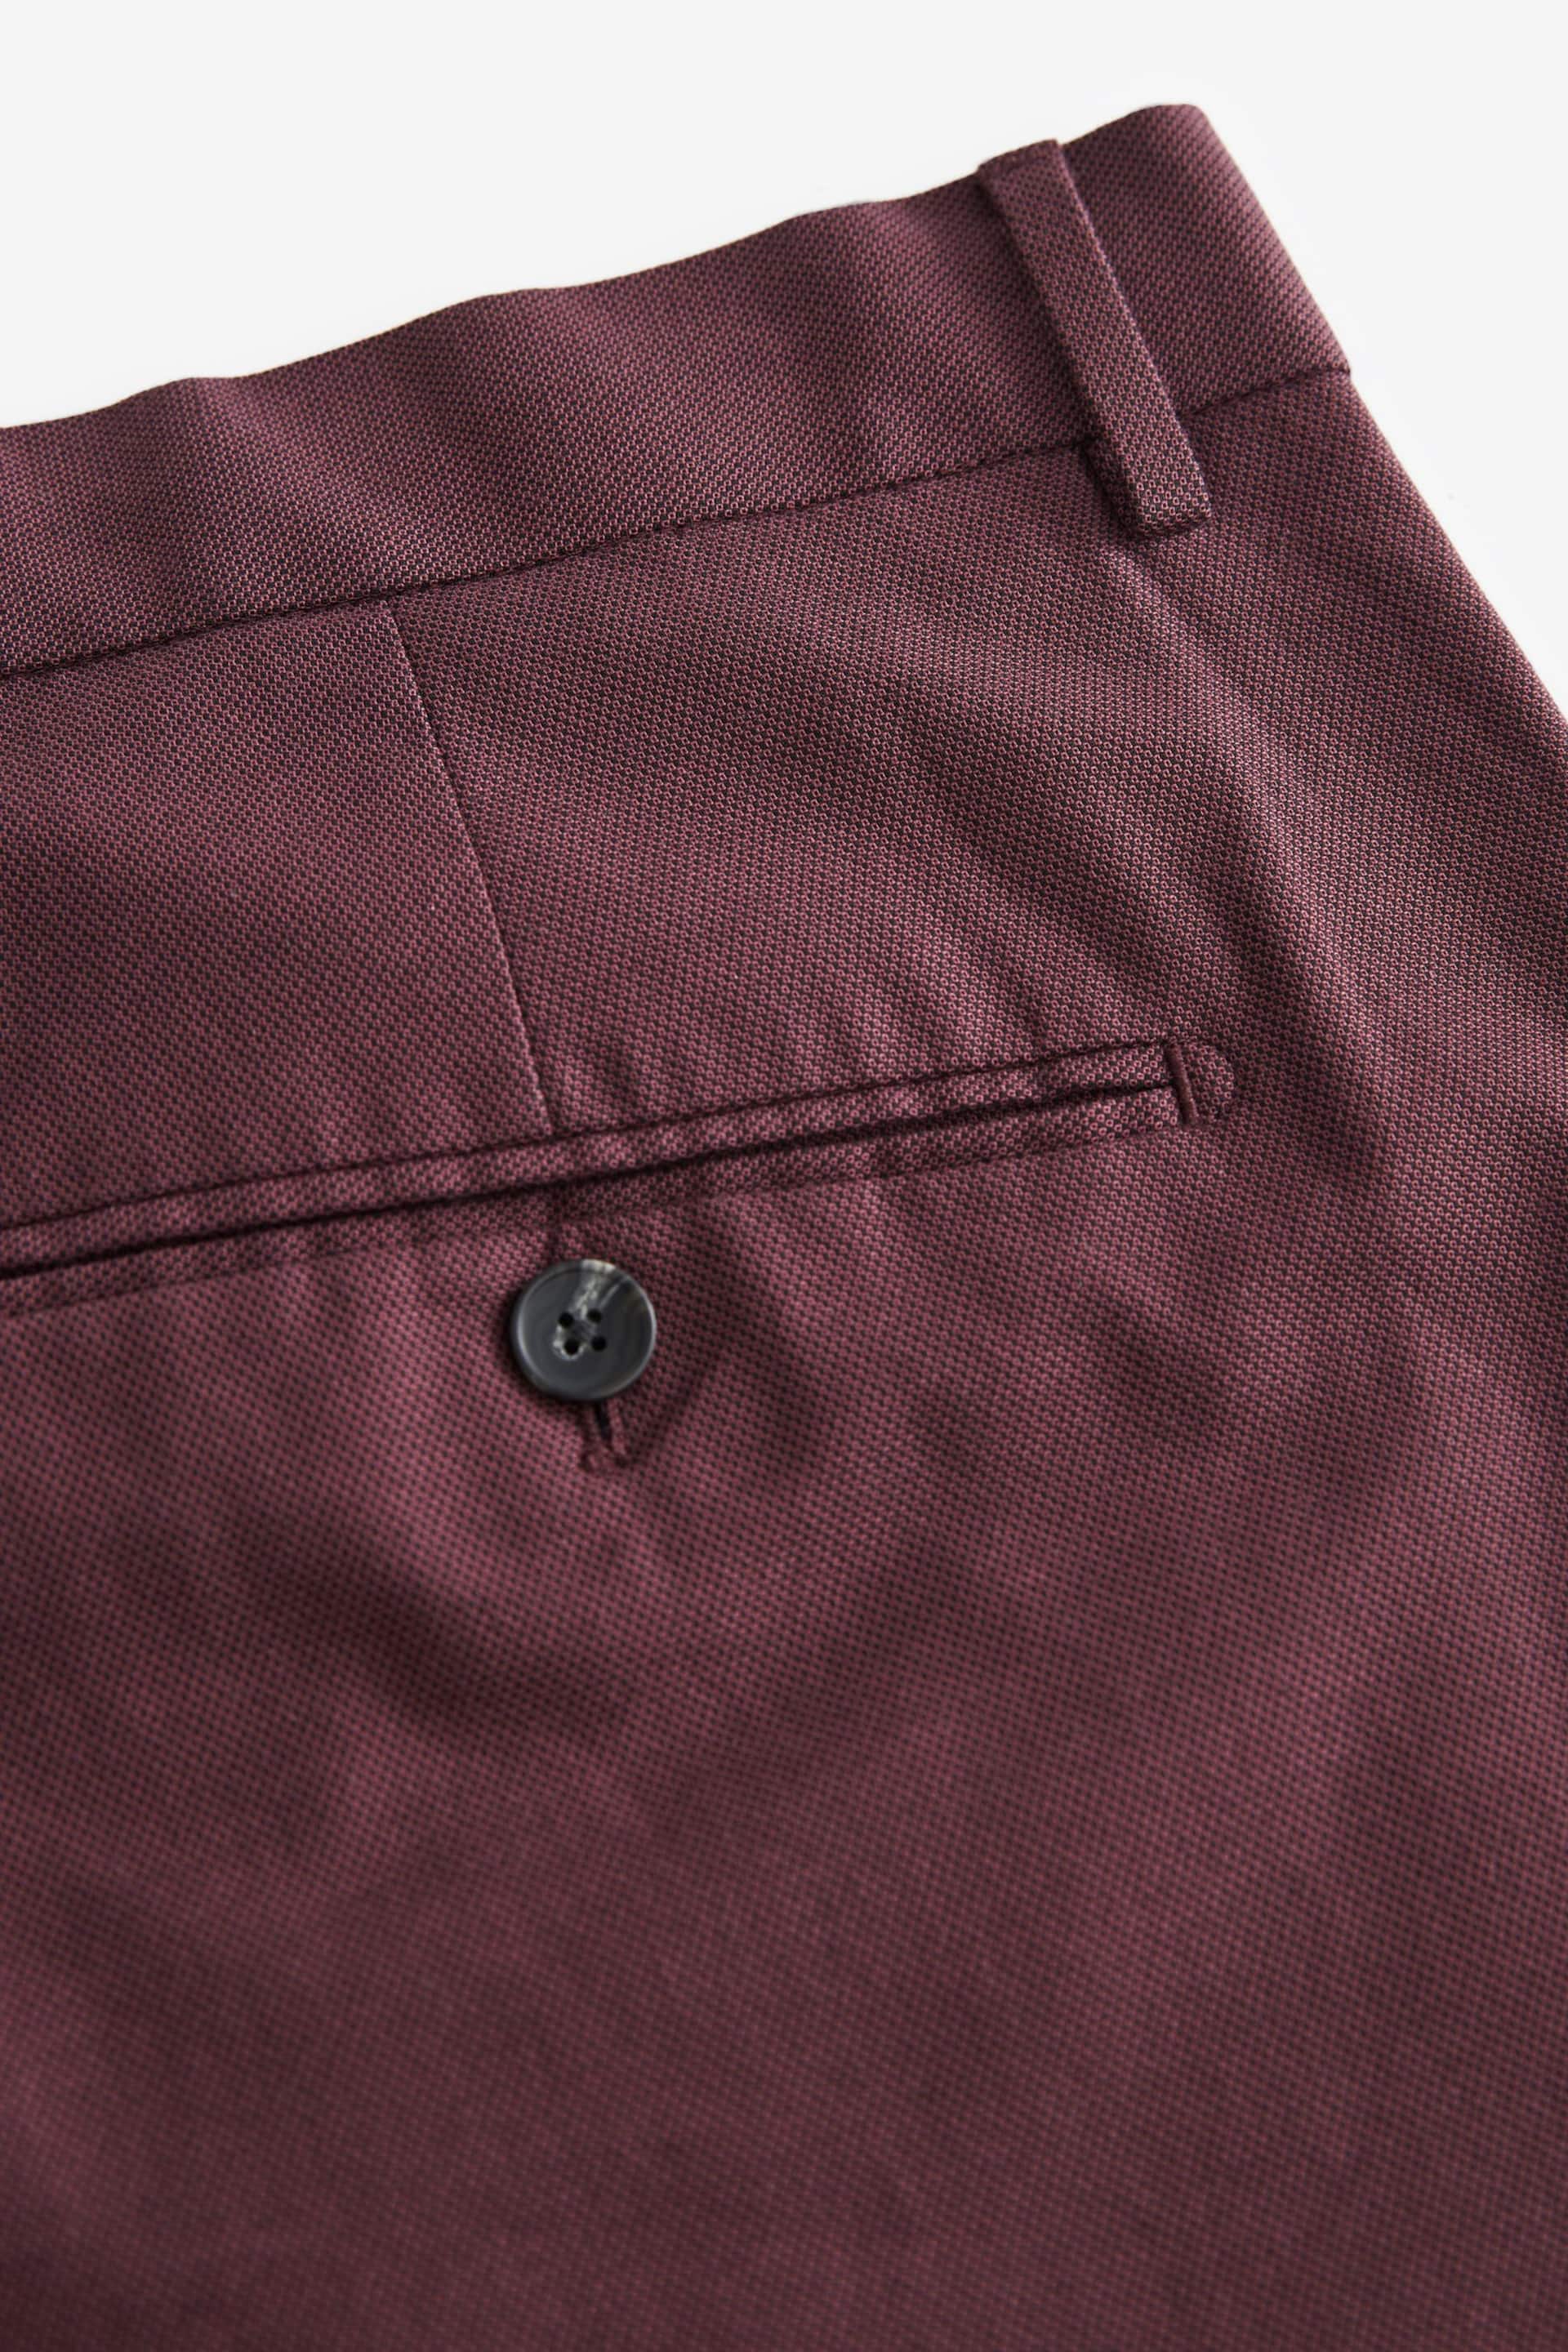 Burgundy Red Slim Smart Textured Chino Trousers - Image 8 of 9